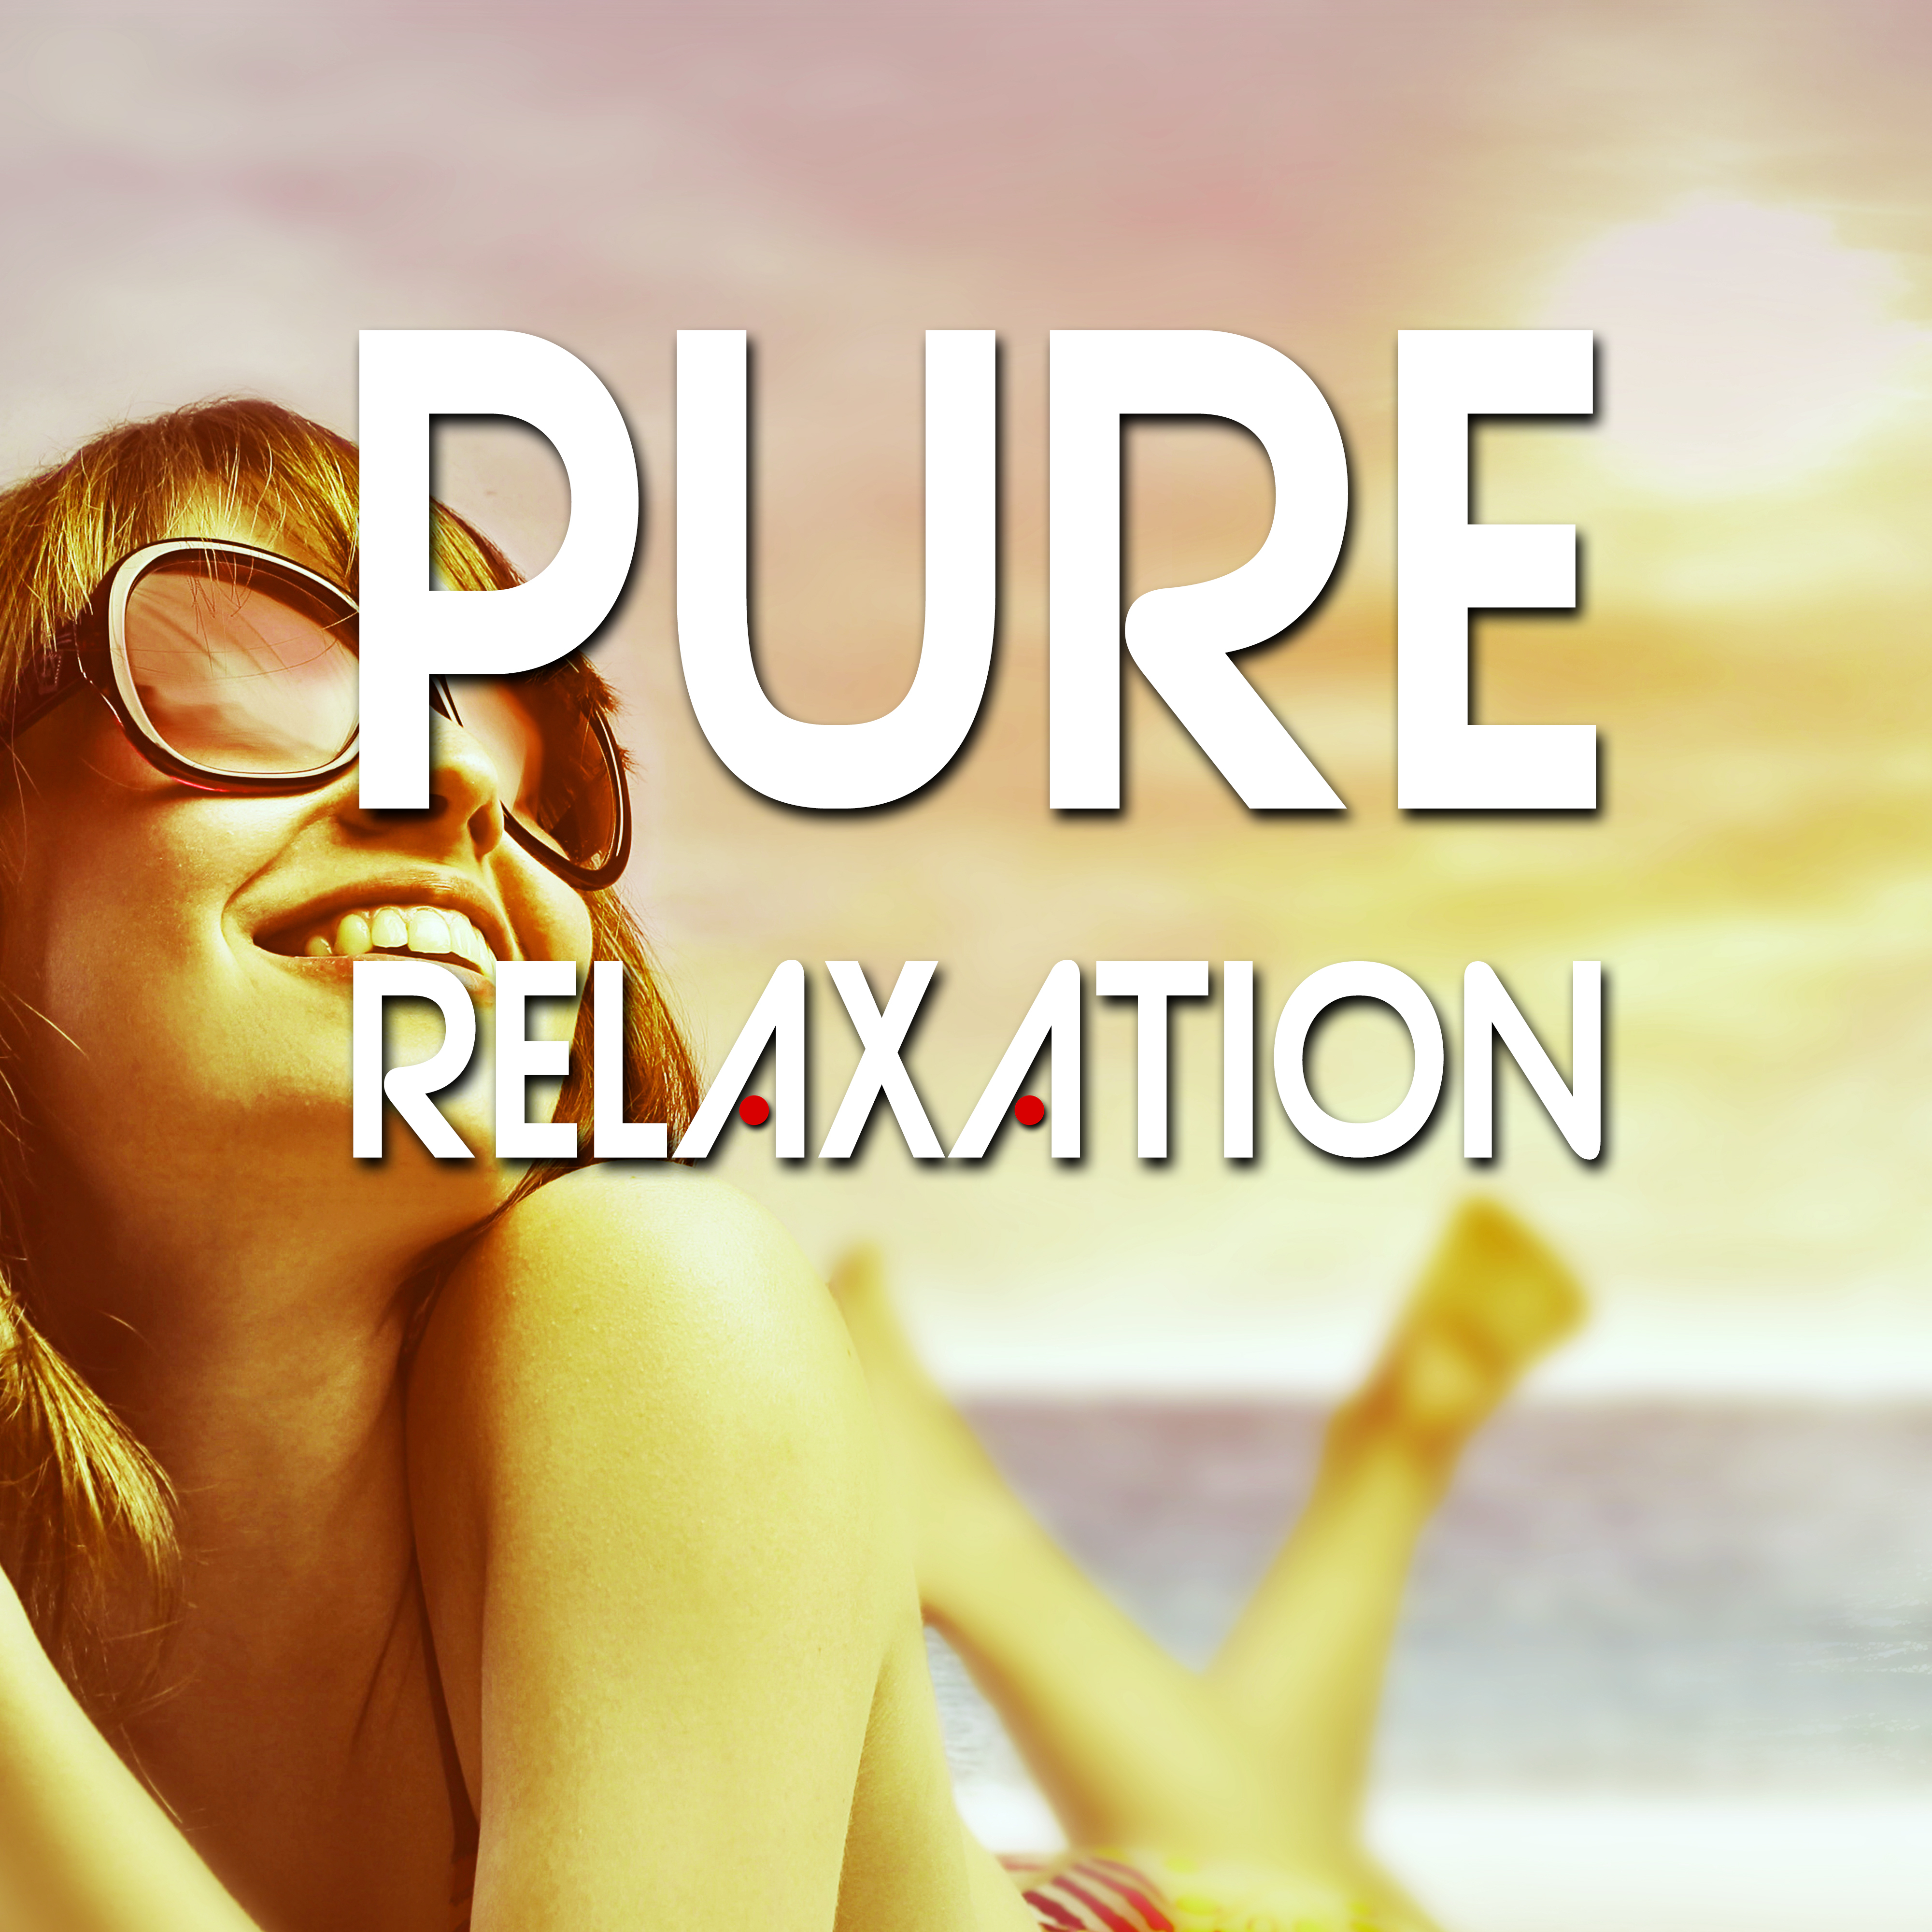 Pure Relaxation - Yoga Music, Surya Namaskar, Asana Positions, Meditation and Relaxation Songs